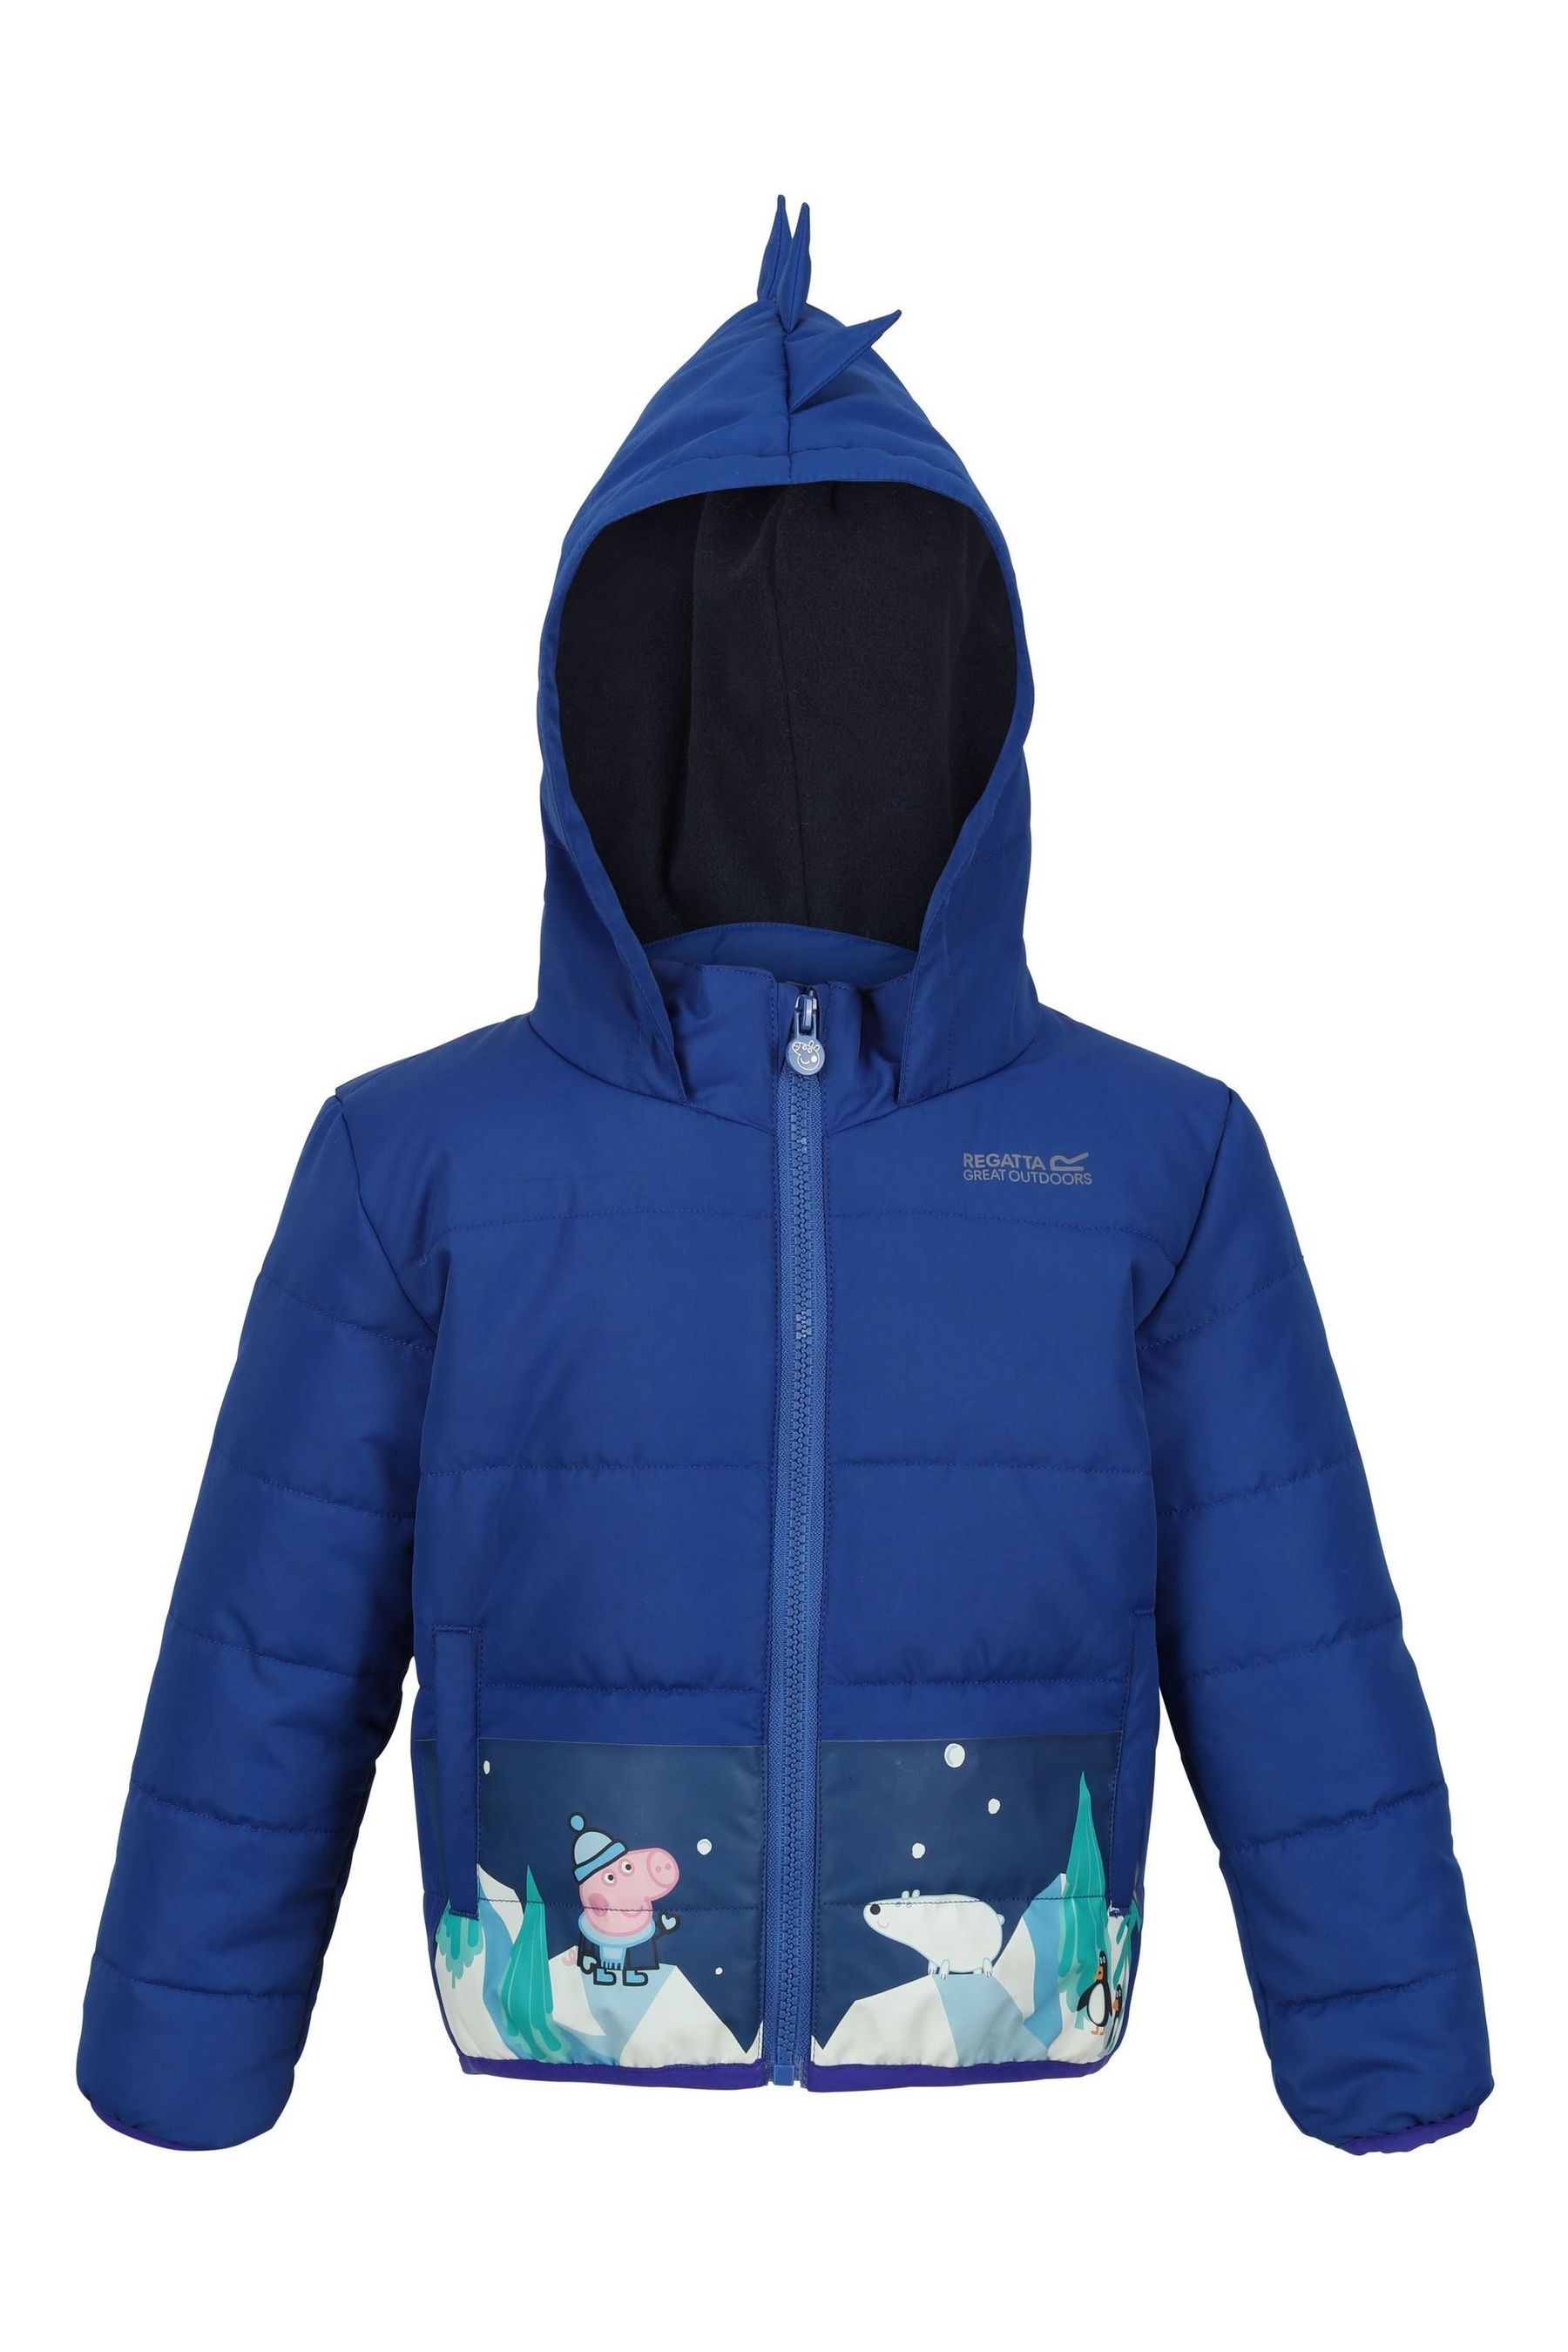 Синяя утепленная куртка Свинка Пеппа для мальчика Regatta, синий